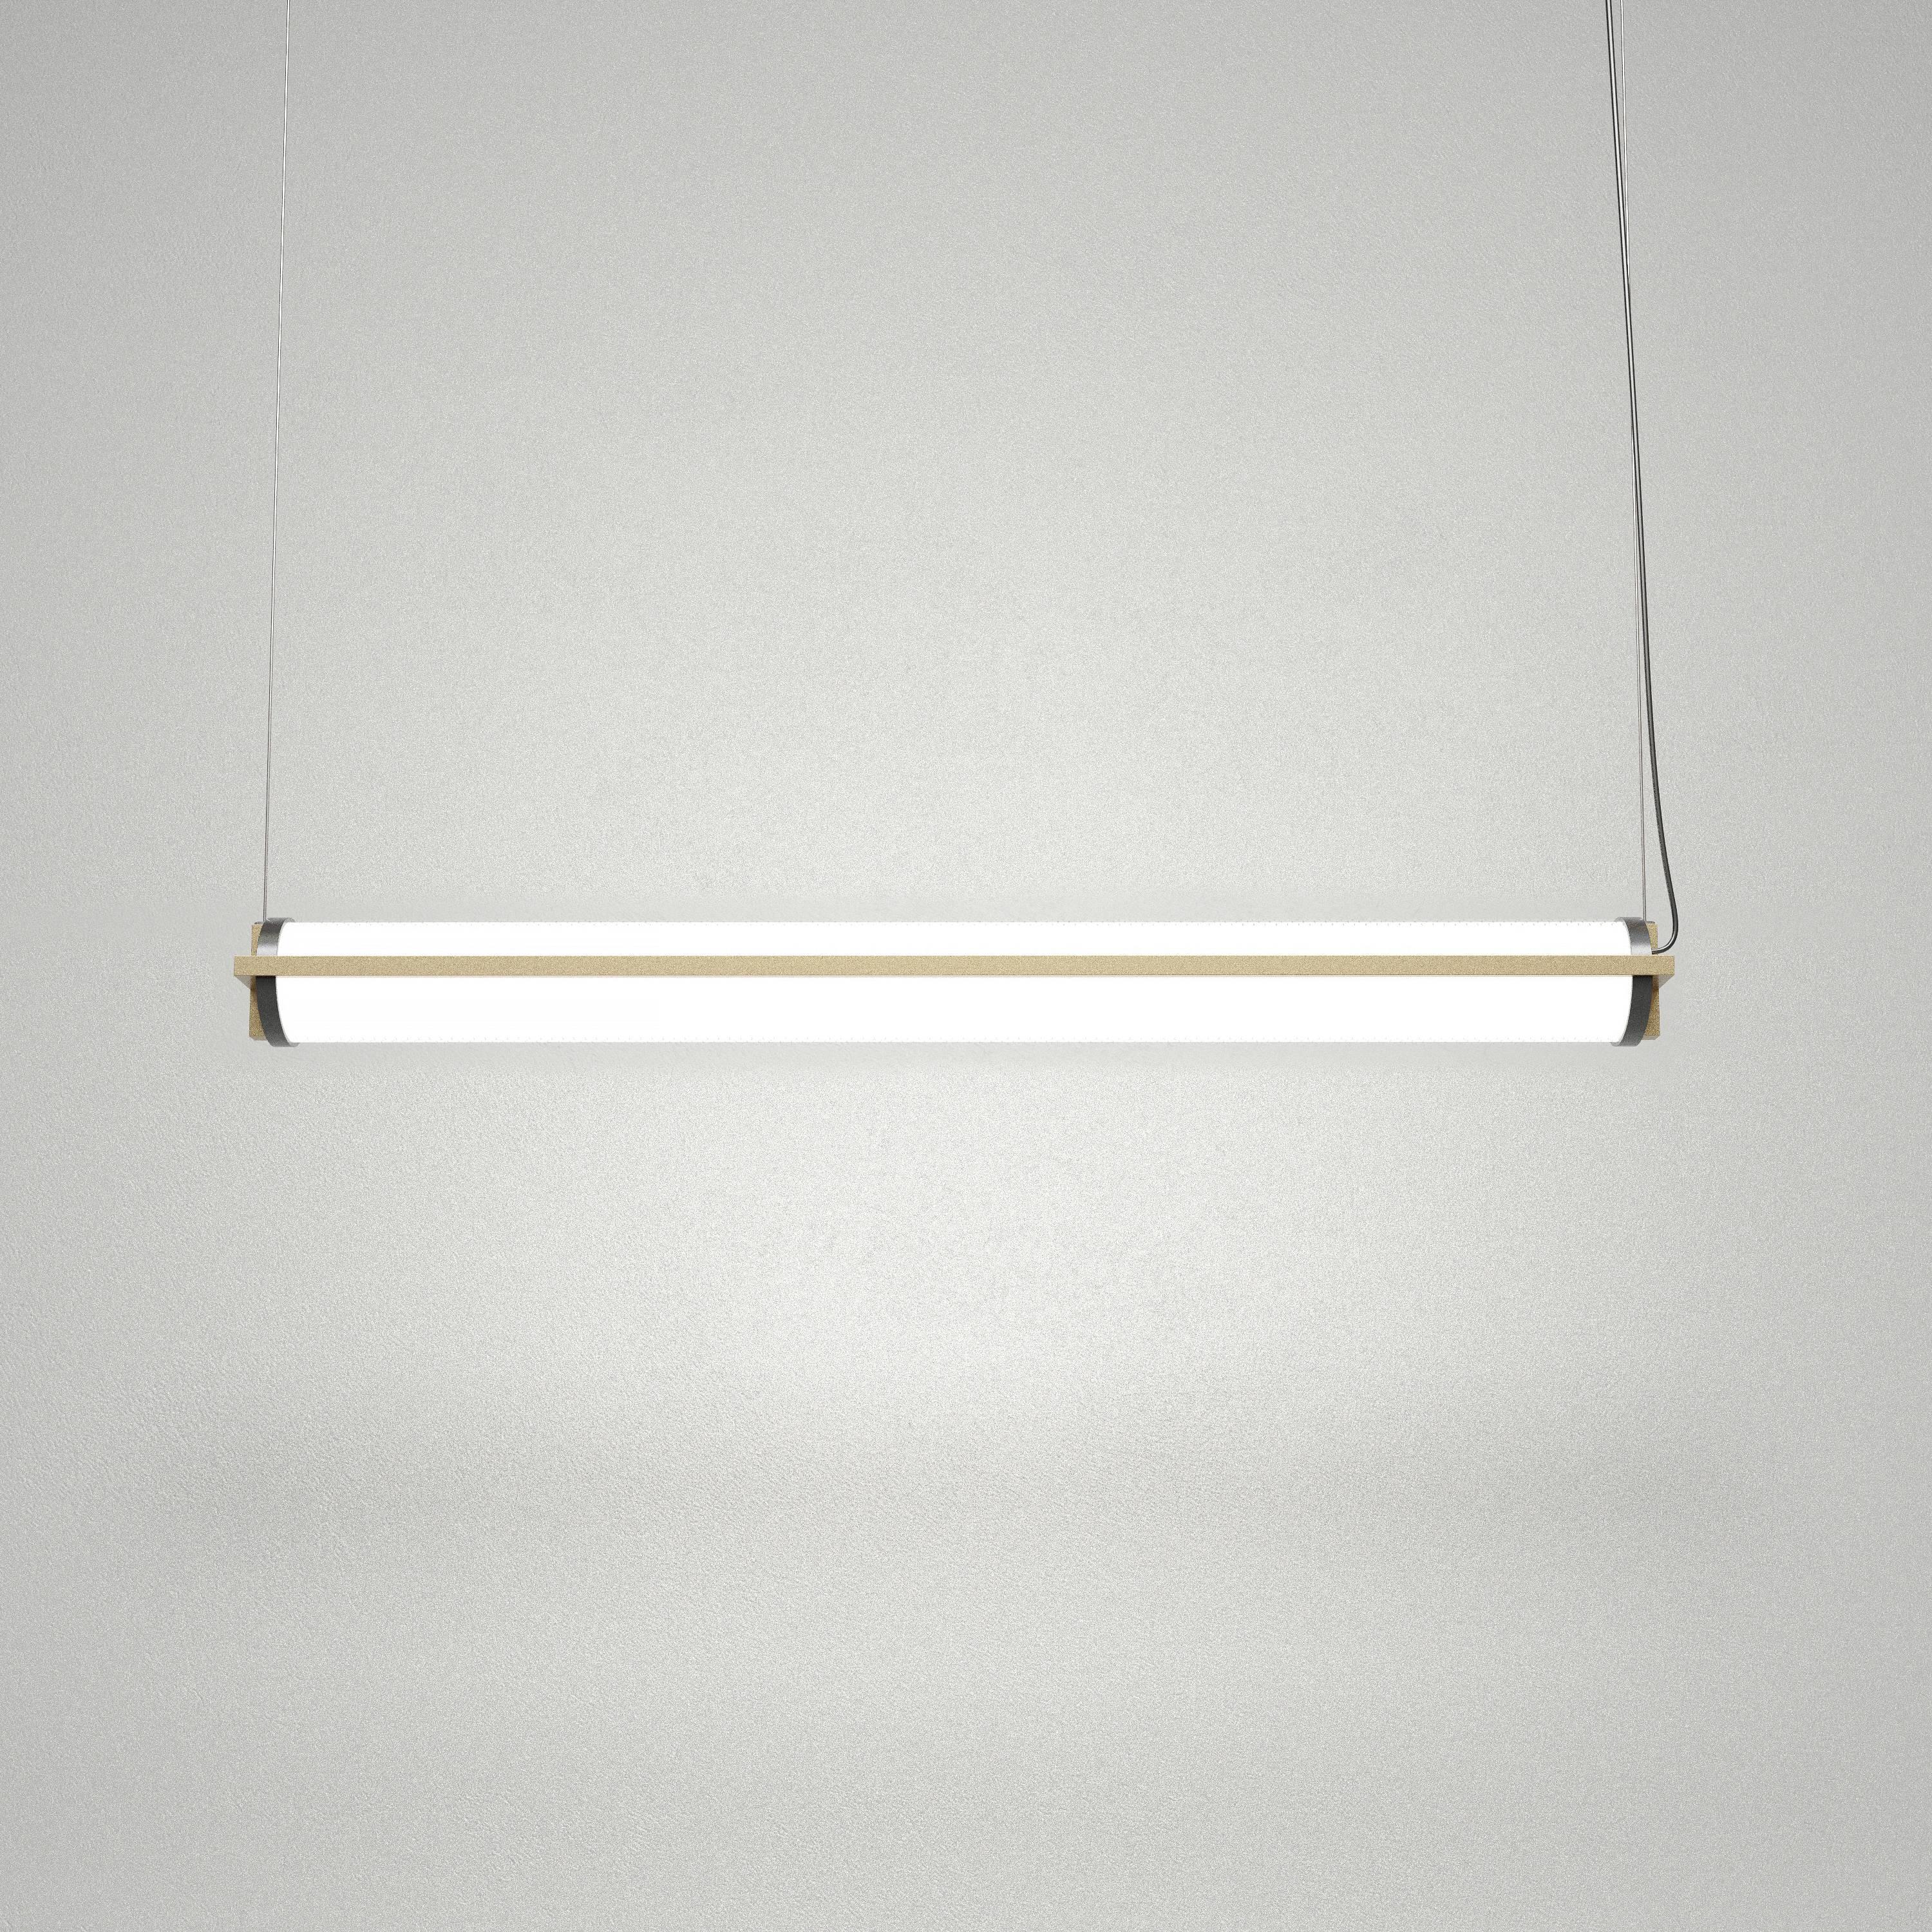 Bauhaus Metropolis Contemporary Modular Suspended LED Light Fixture in 48